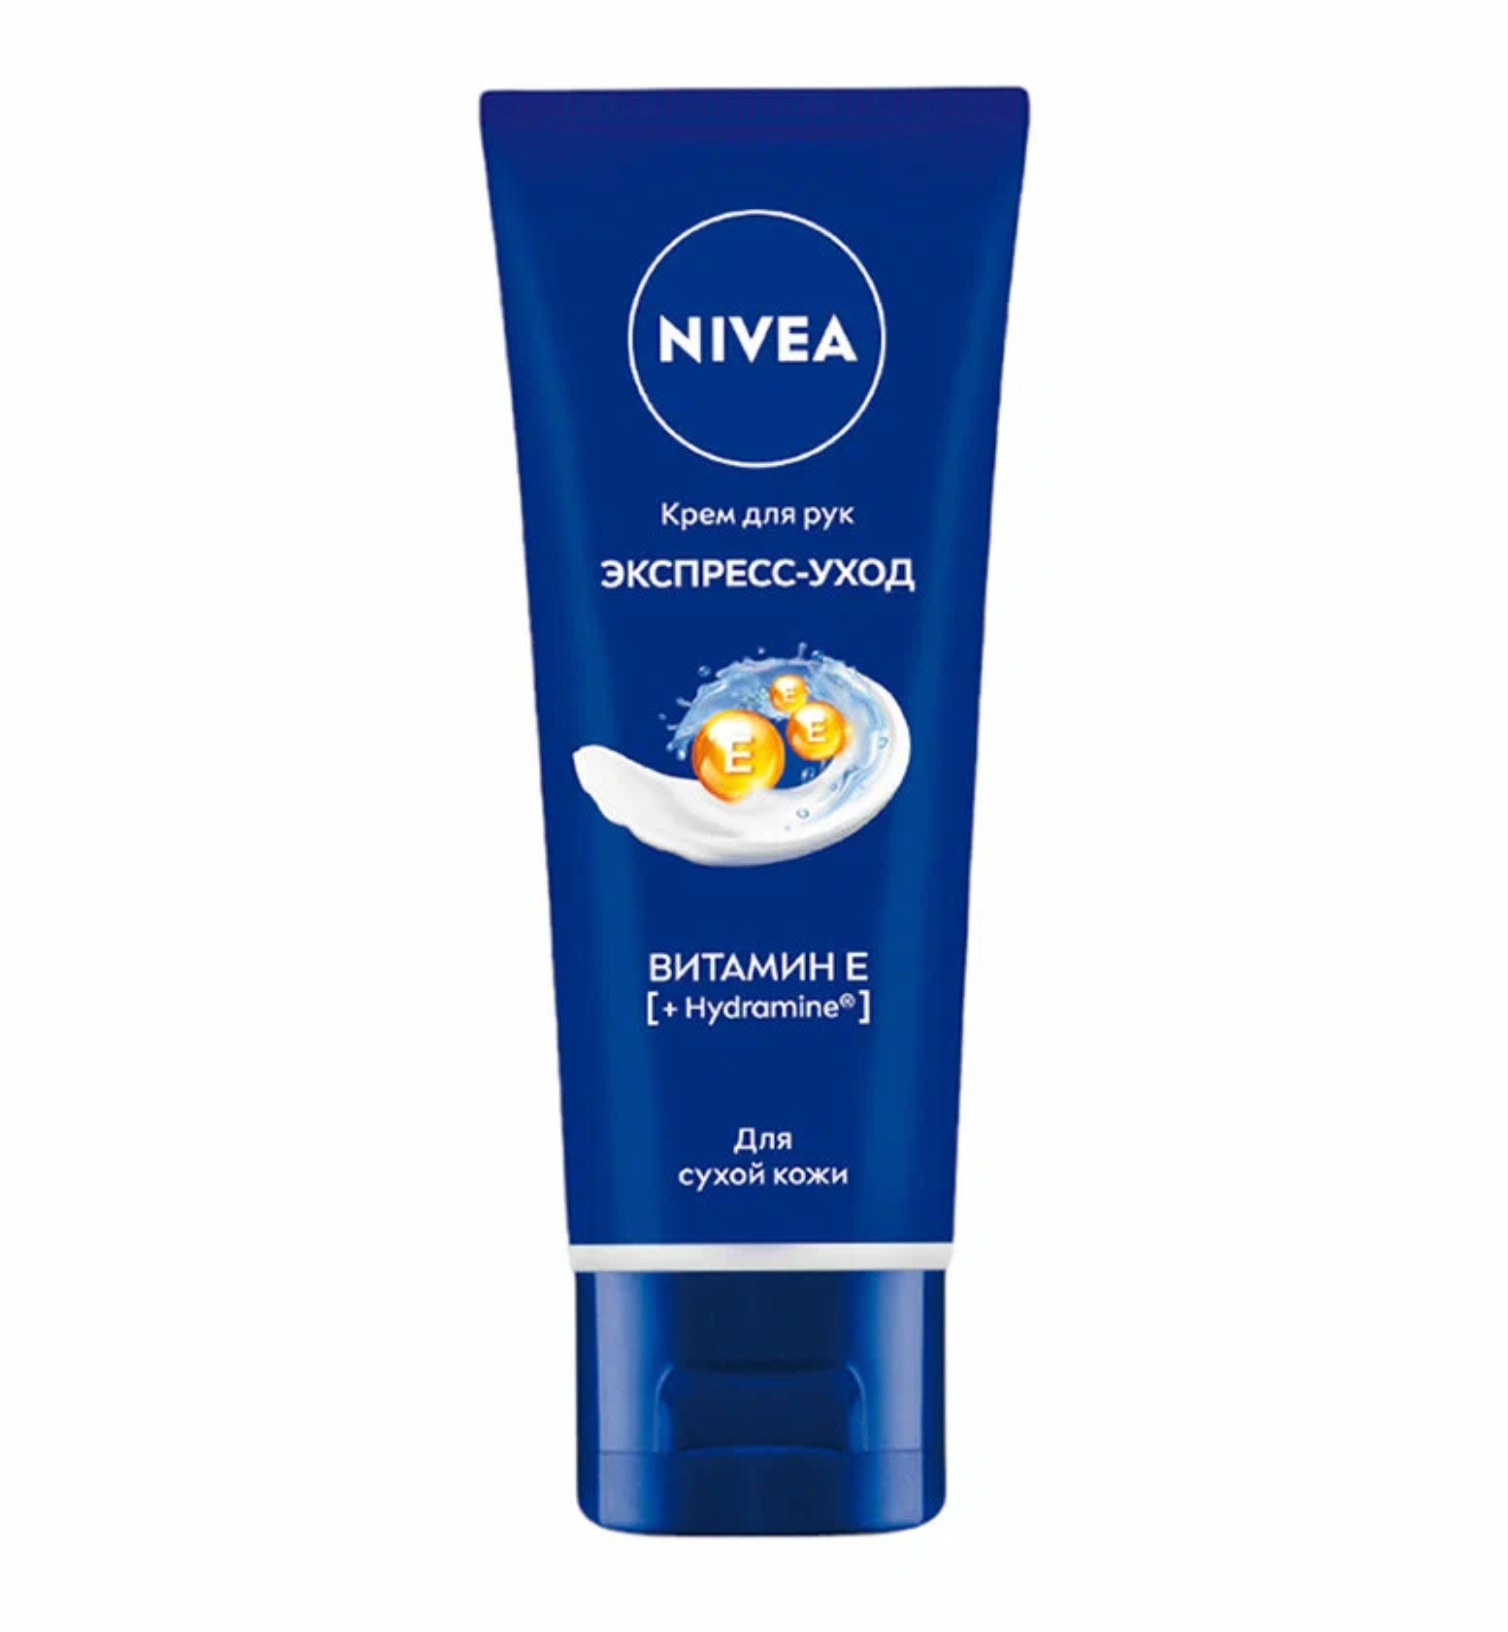 Нивея / Nivea - Крем для сухой кожи рук Экспресс-уход Витамин E 50 мл